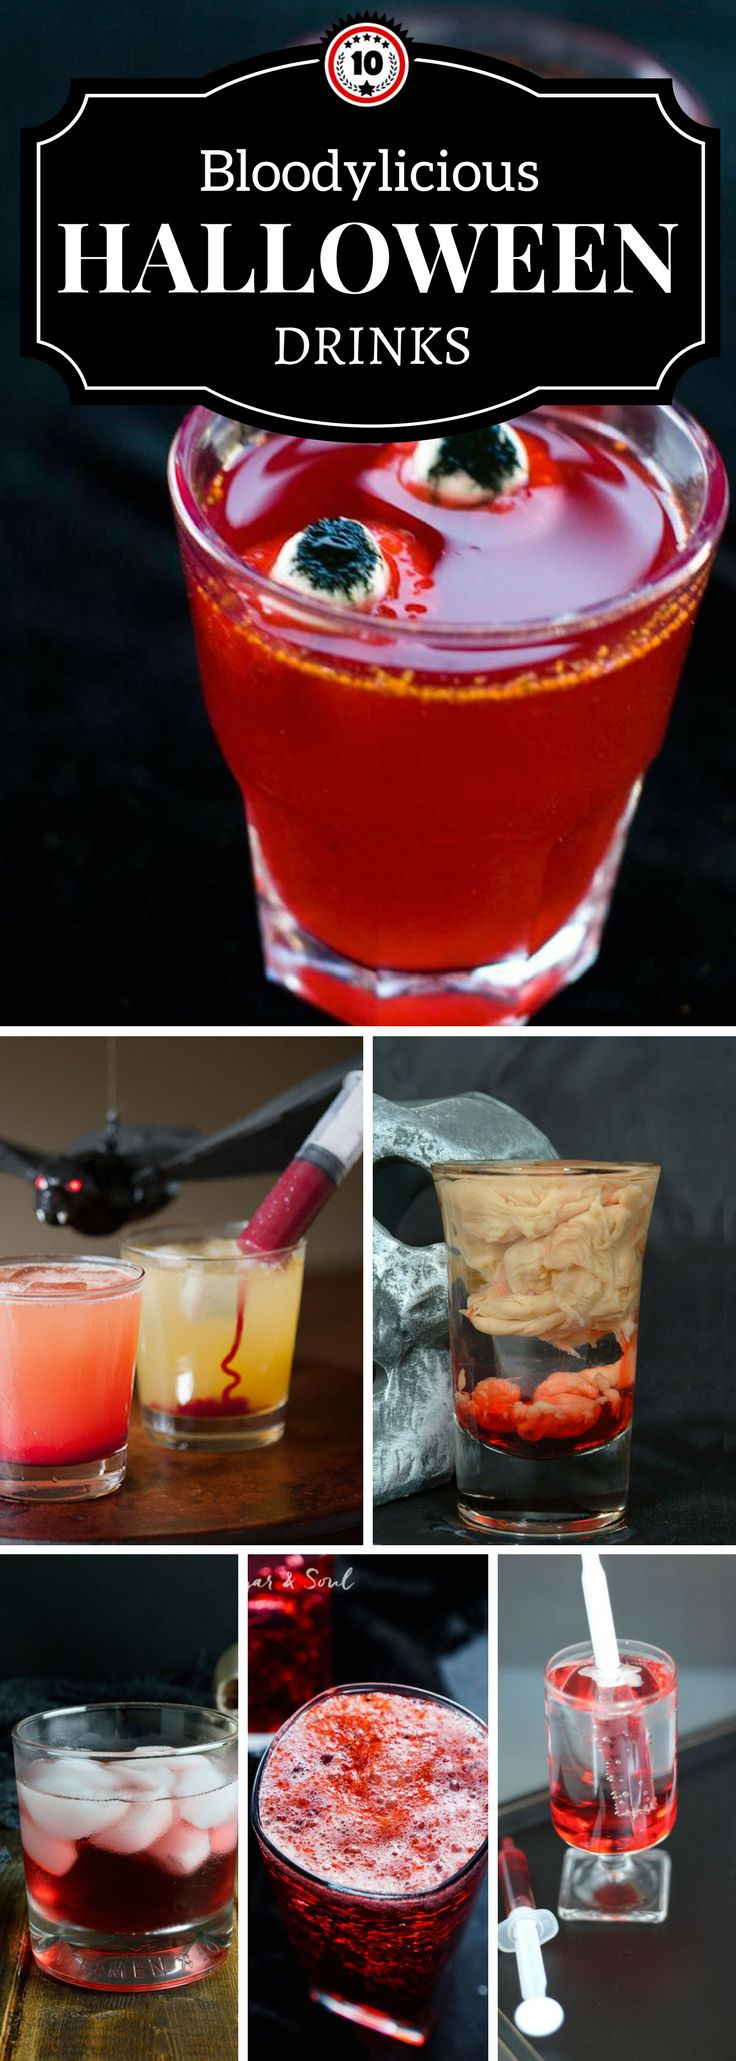 Halloween Drinks Recipes
 Best 25 Halloween drinks ideas on Pinterest